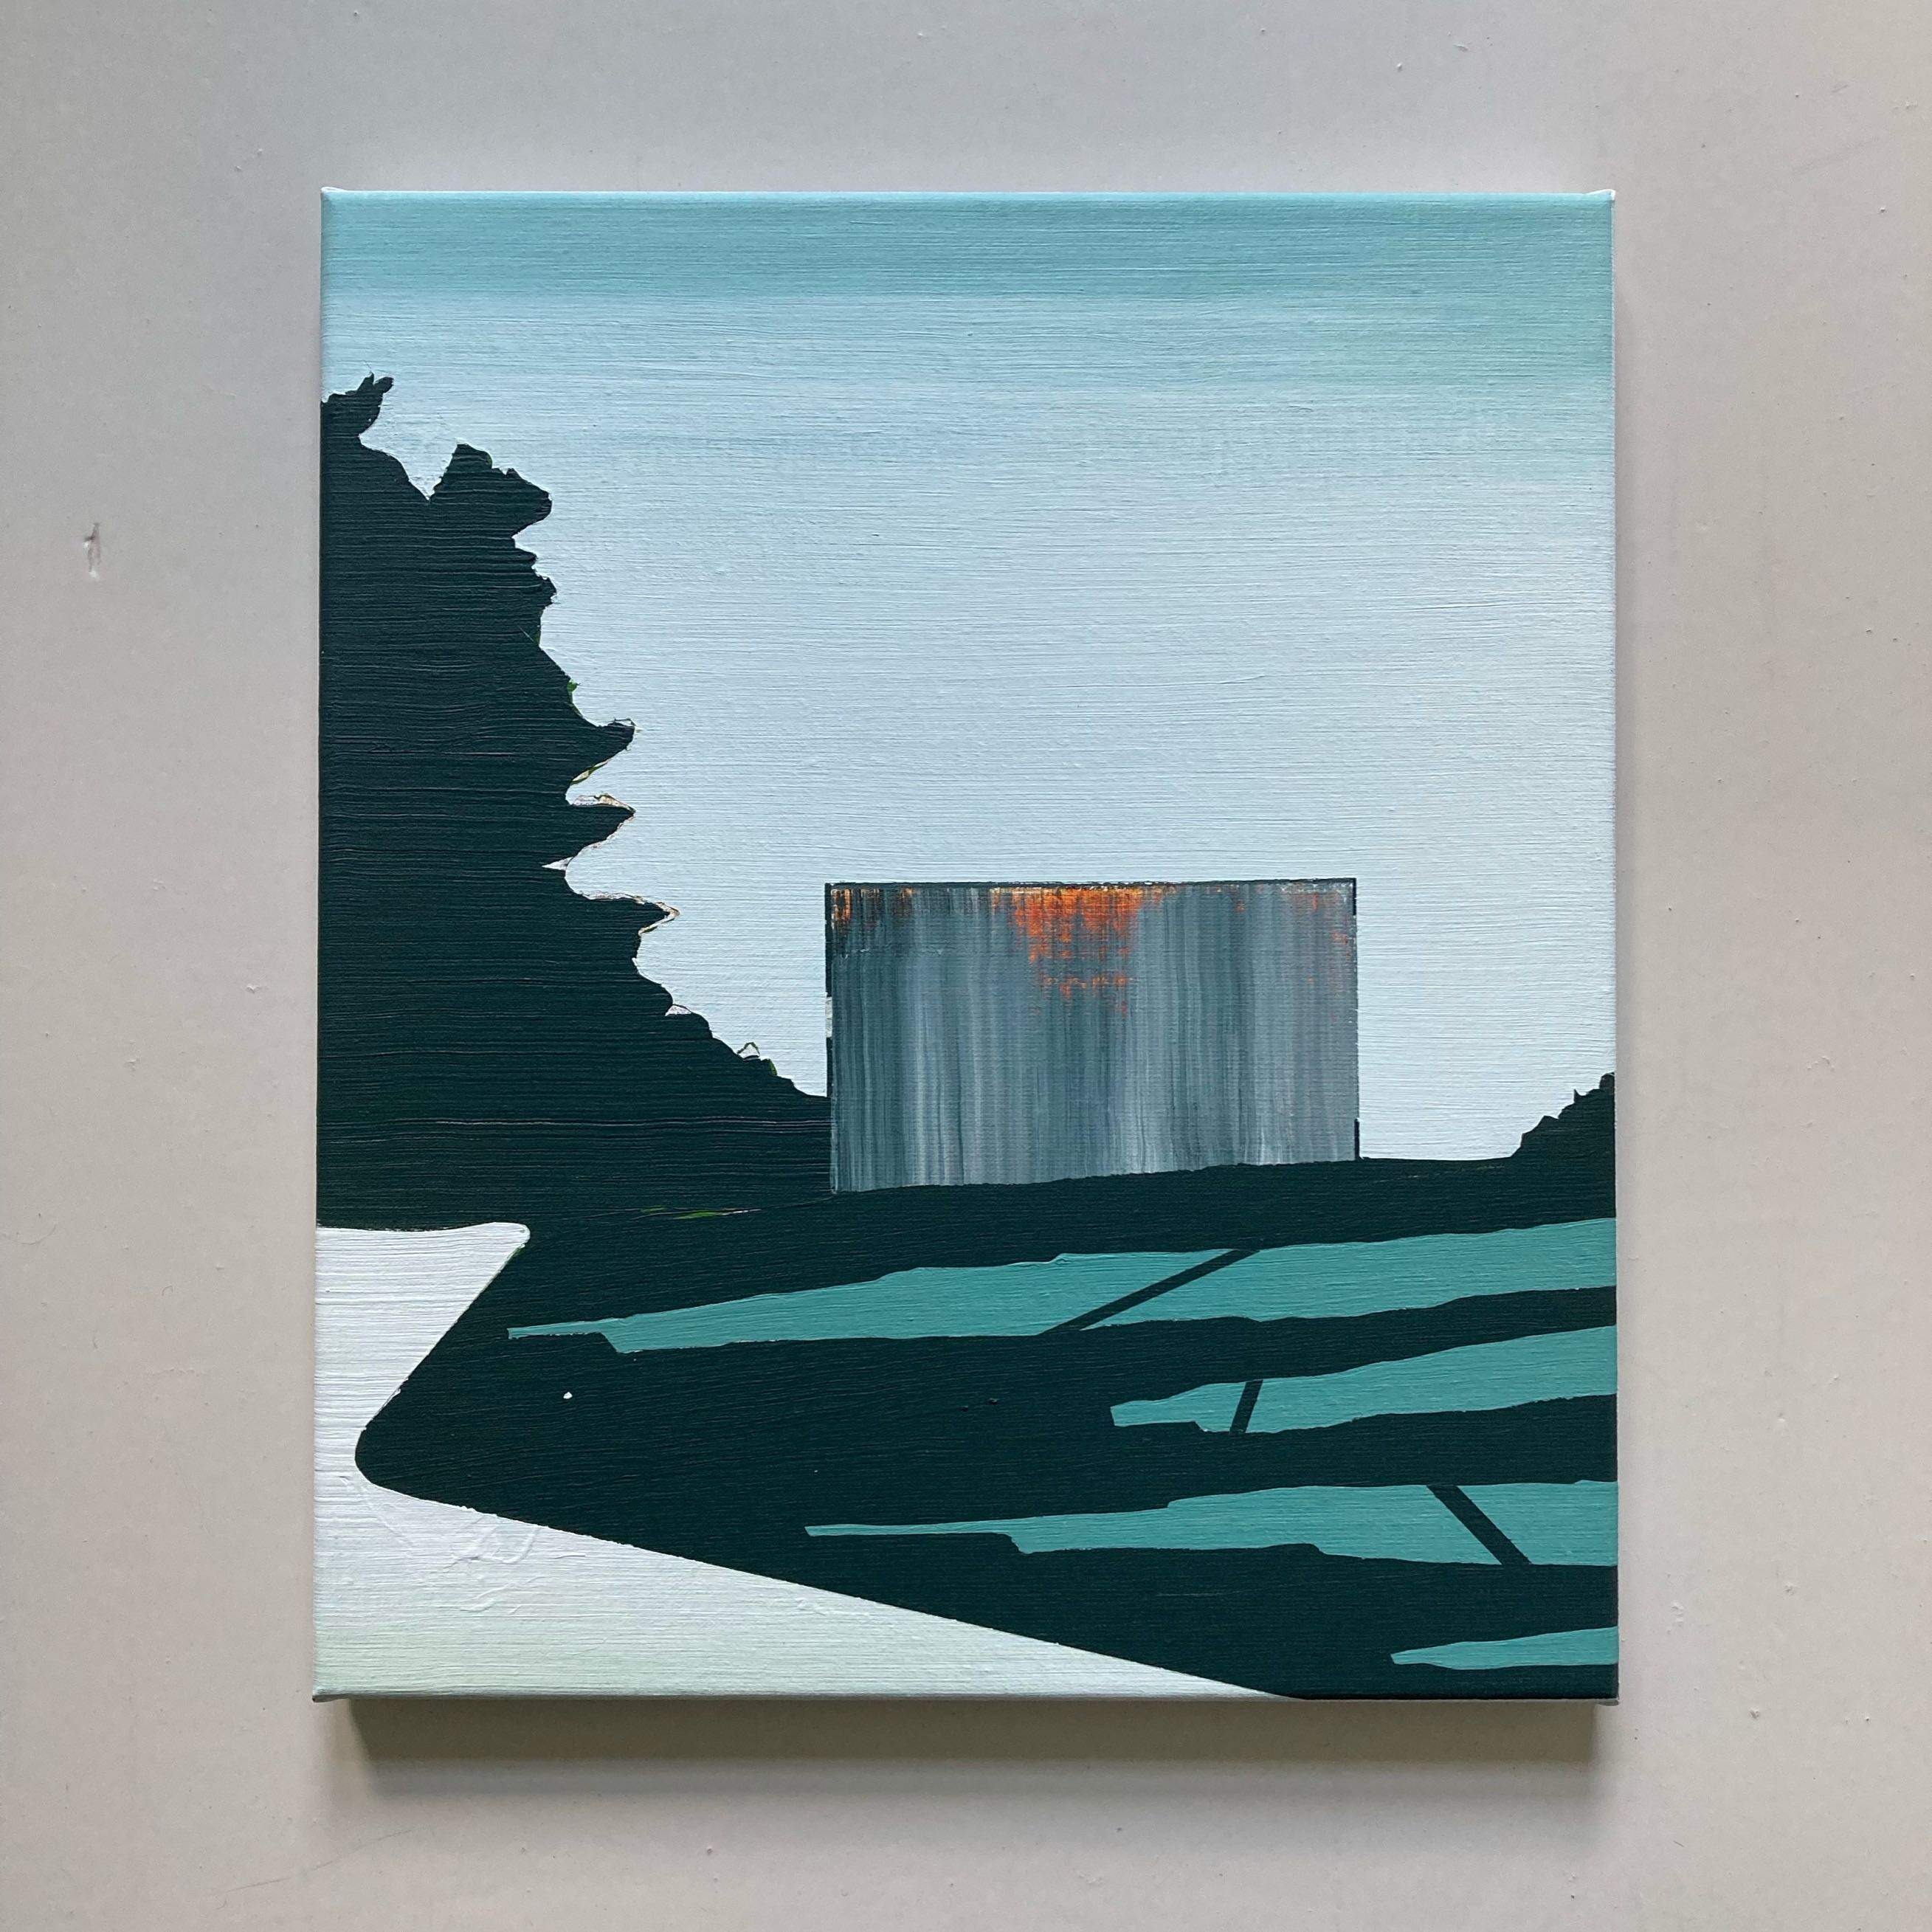 'glow', 38 x 44 cm, acrylics on canvas, 2020